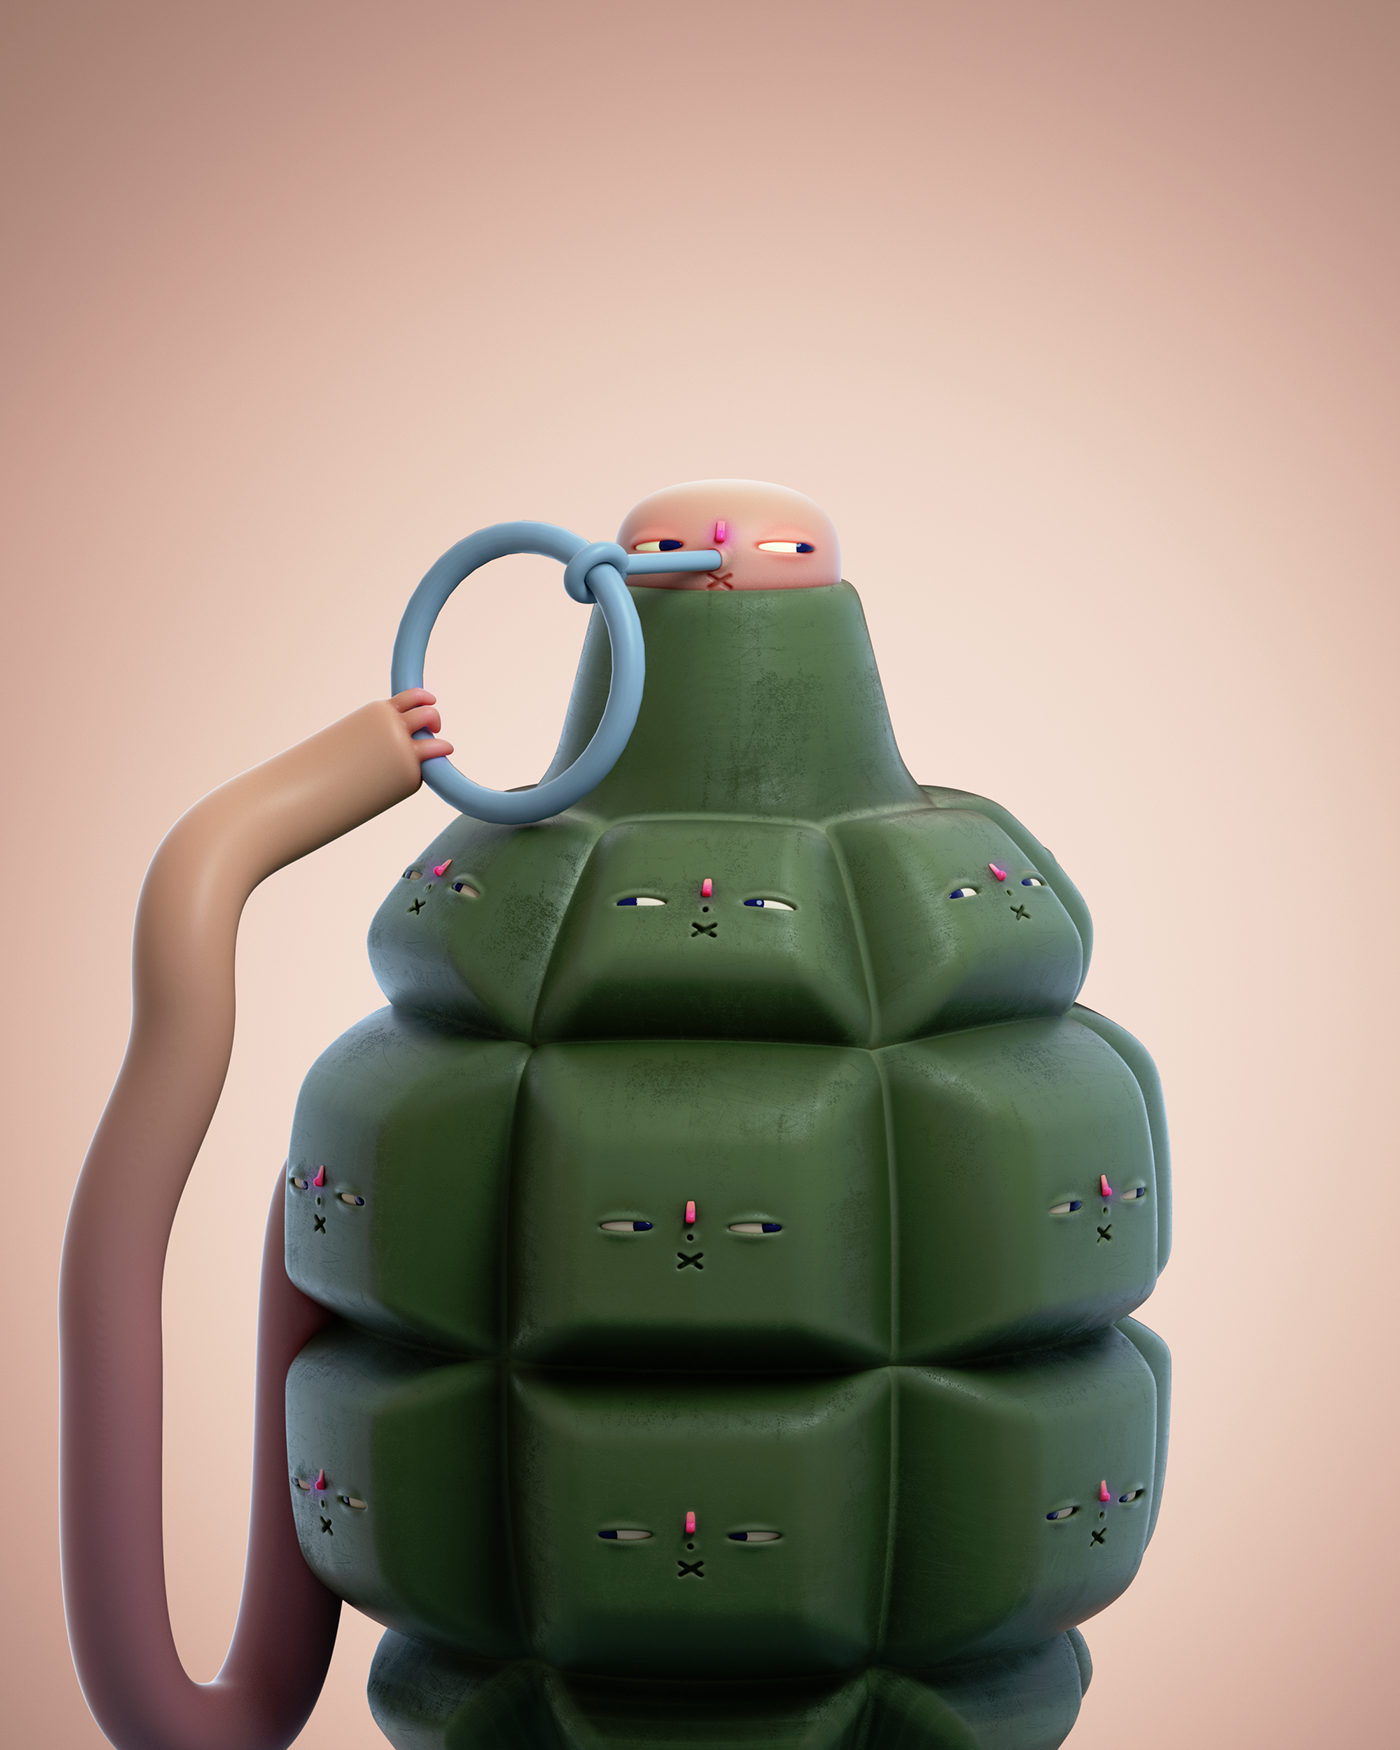 grenade War Weapon 3D cute minimalist surreal toy Fun green